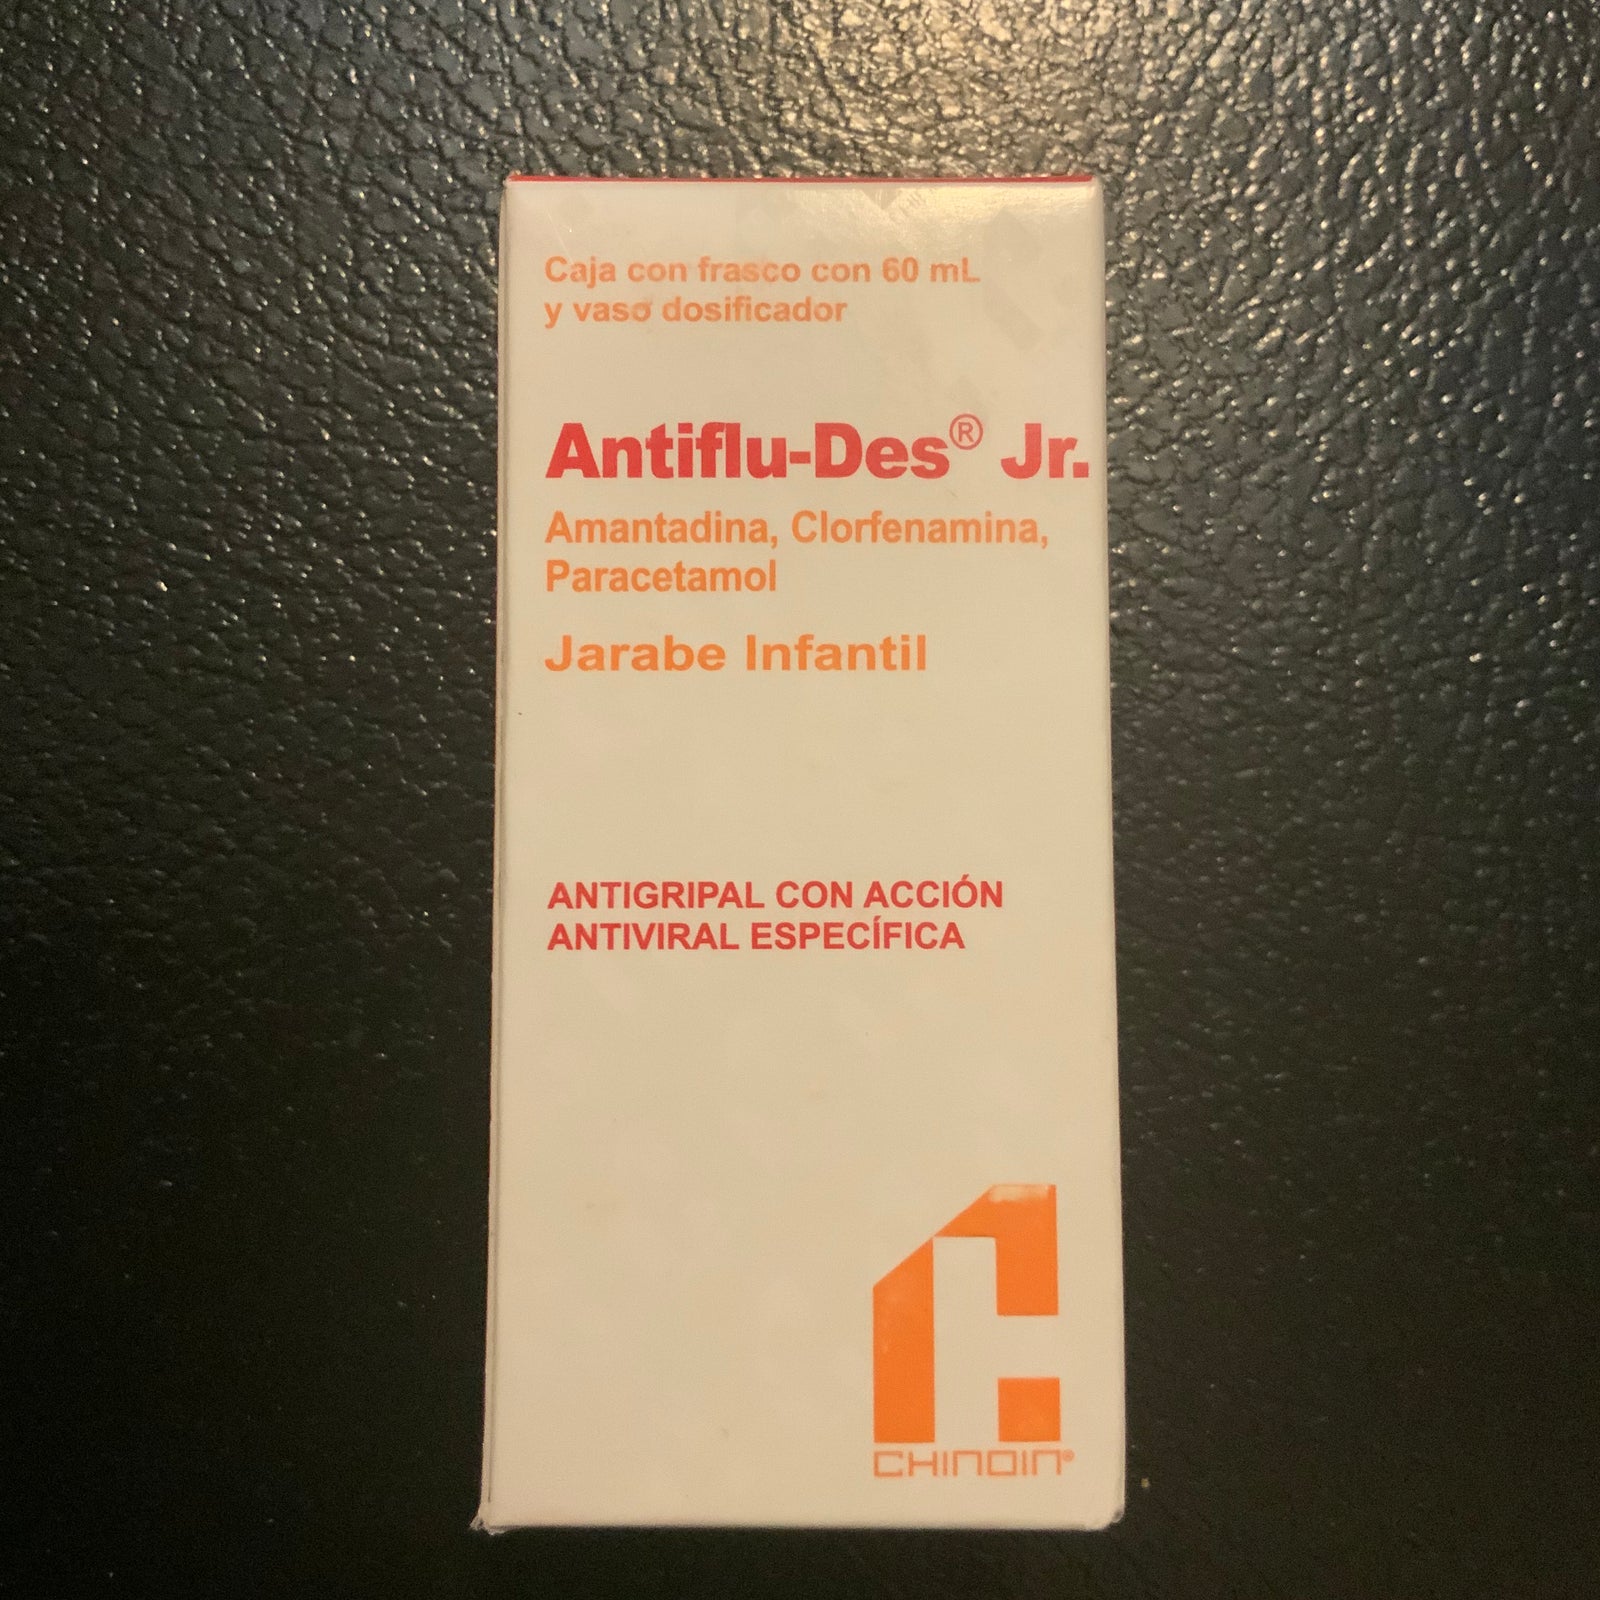 Antiflu-Des Jr. – Ramirez Health and Beauty